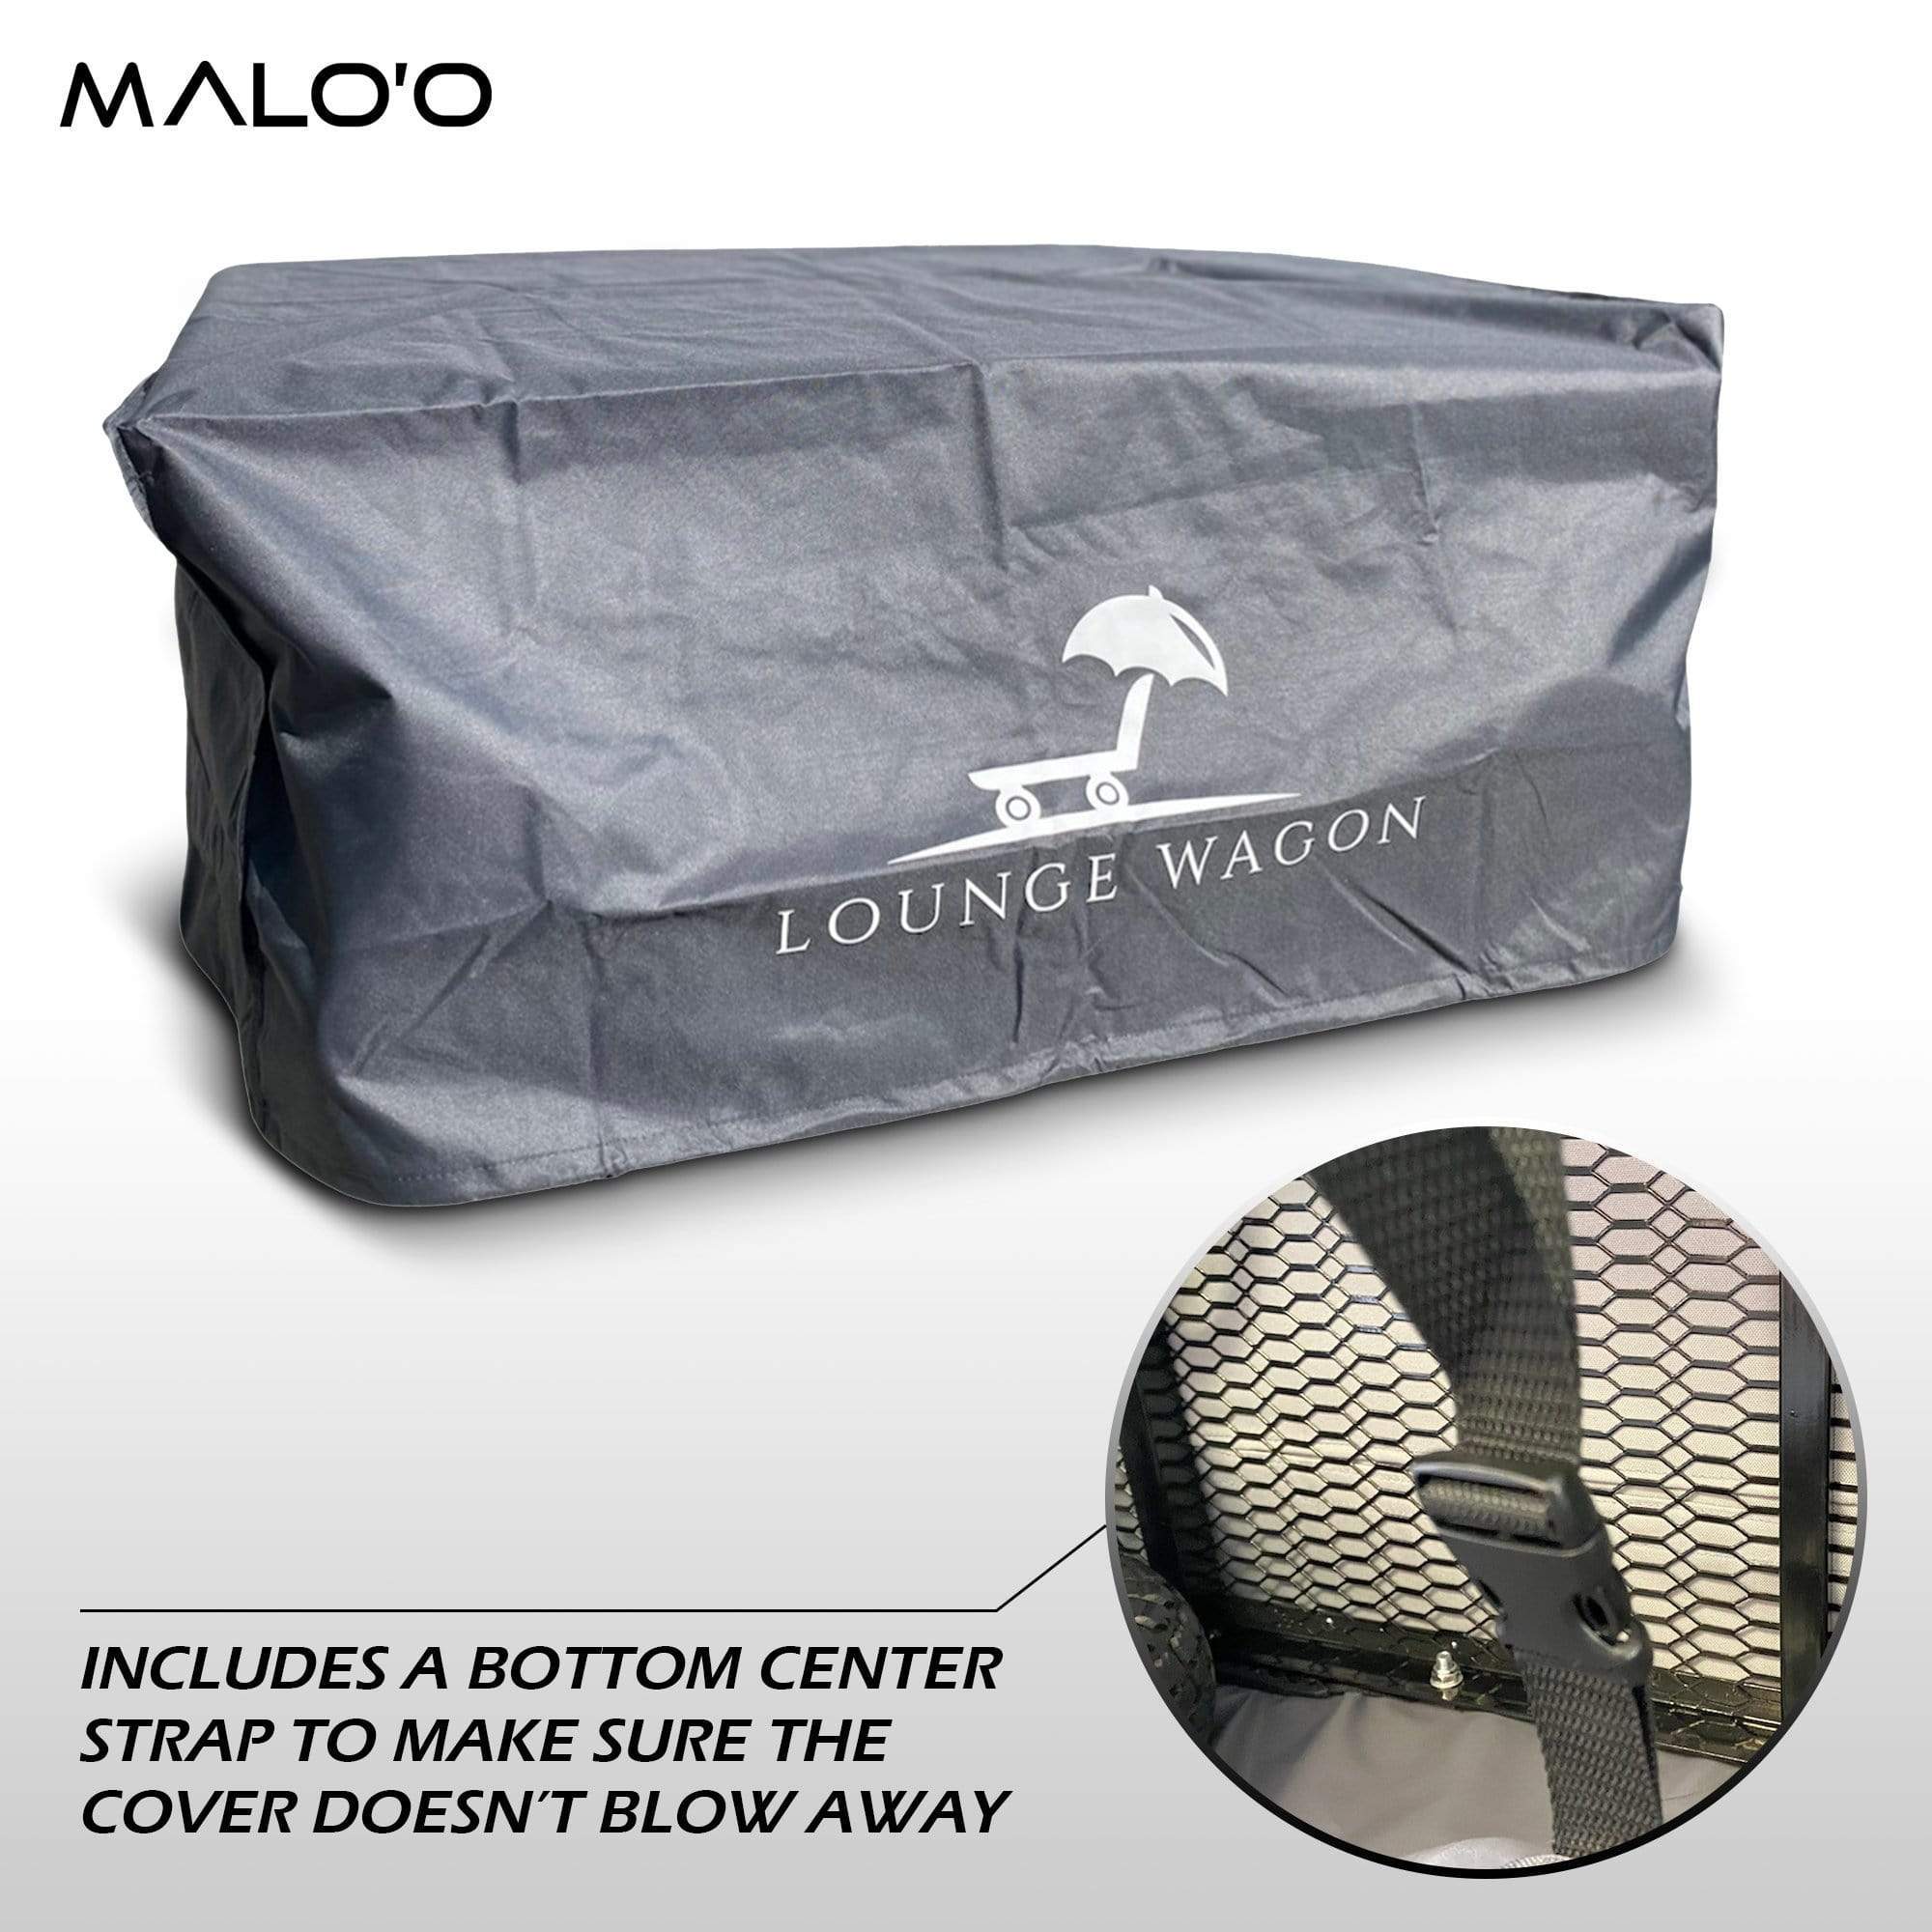 Malo&#39;o Racks Lounge Wagon Storage Cover